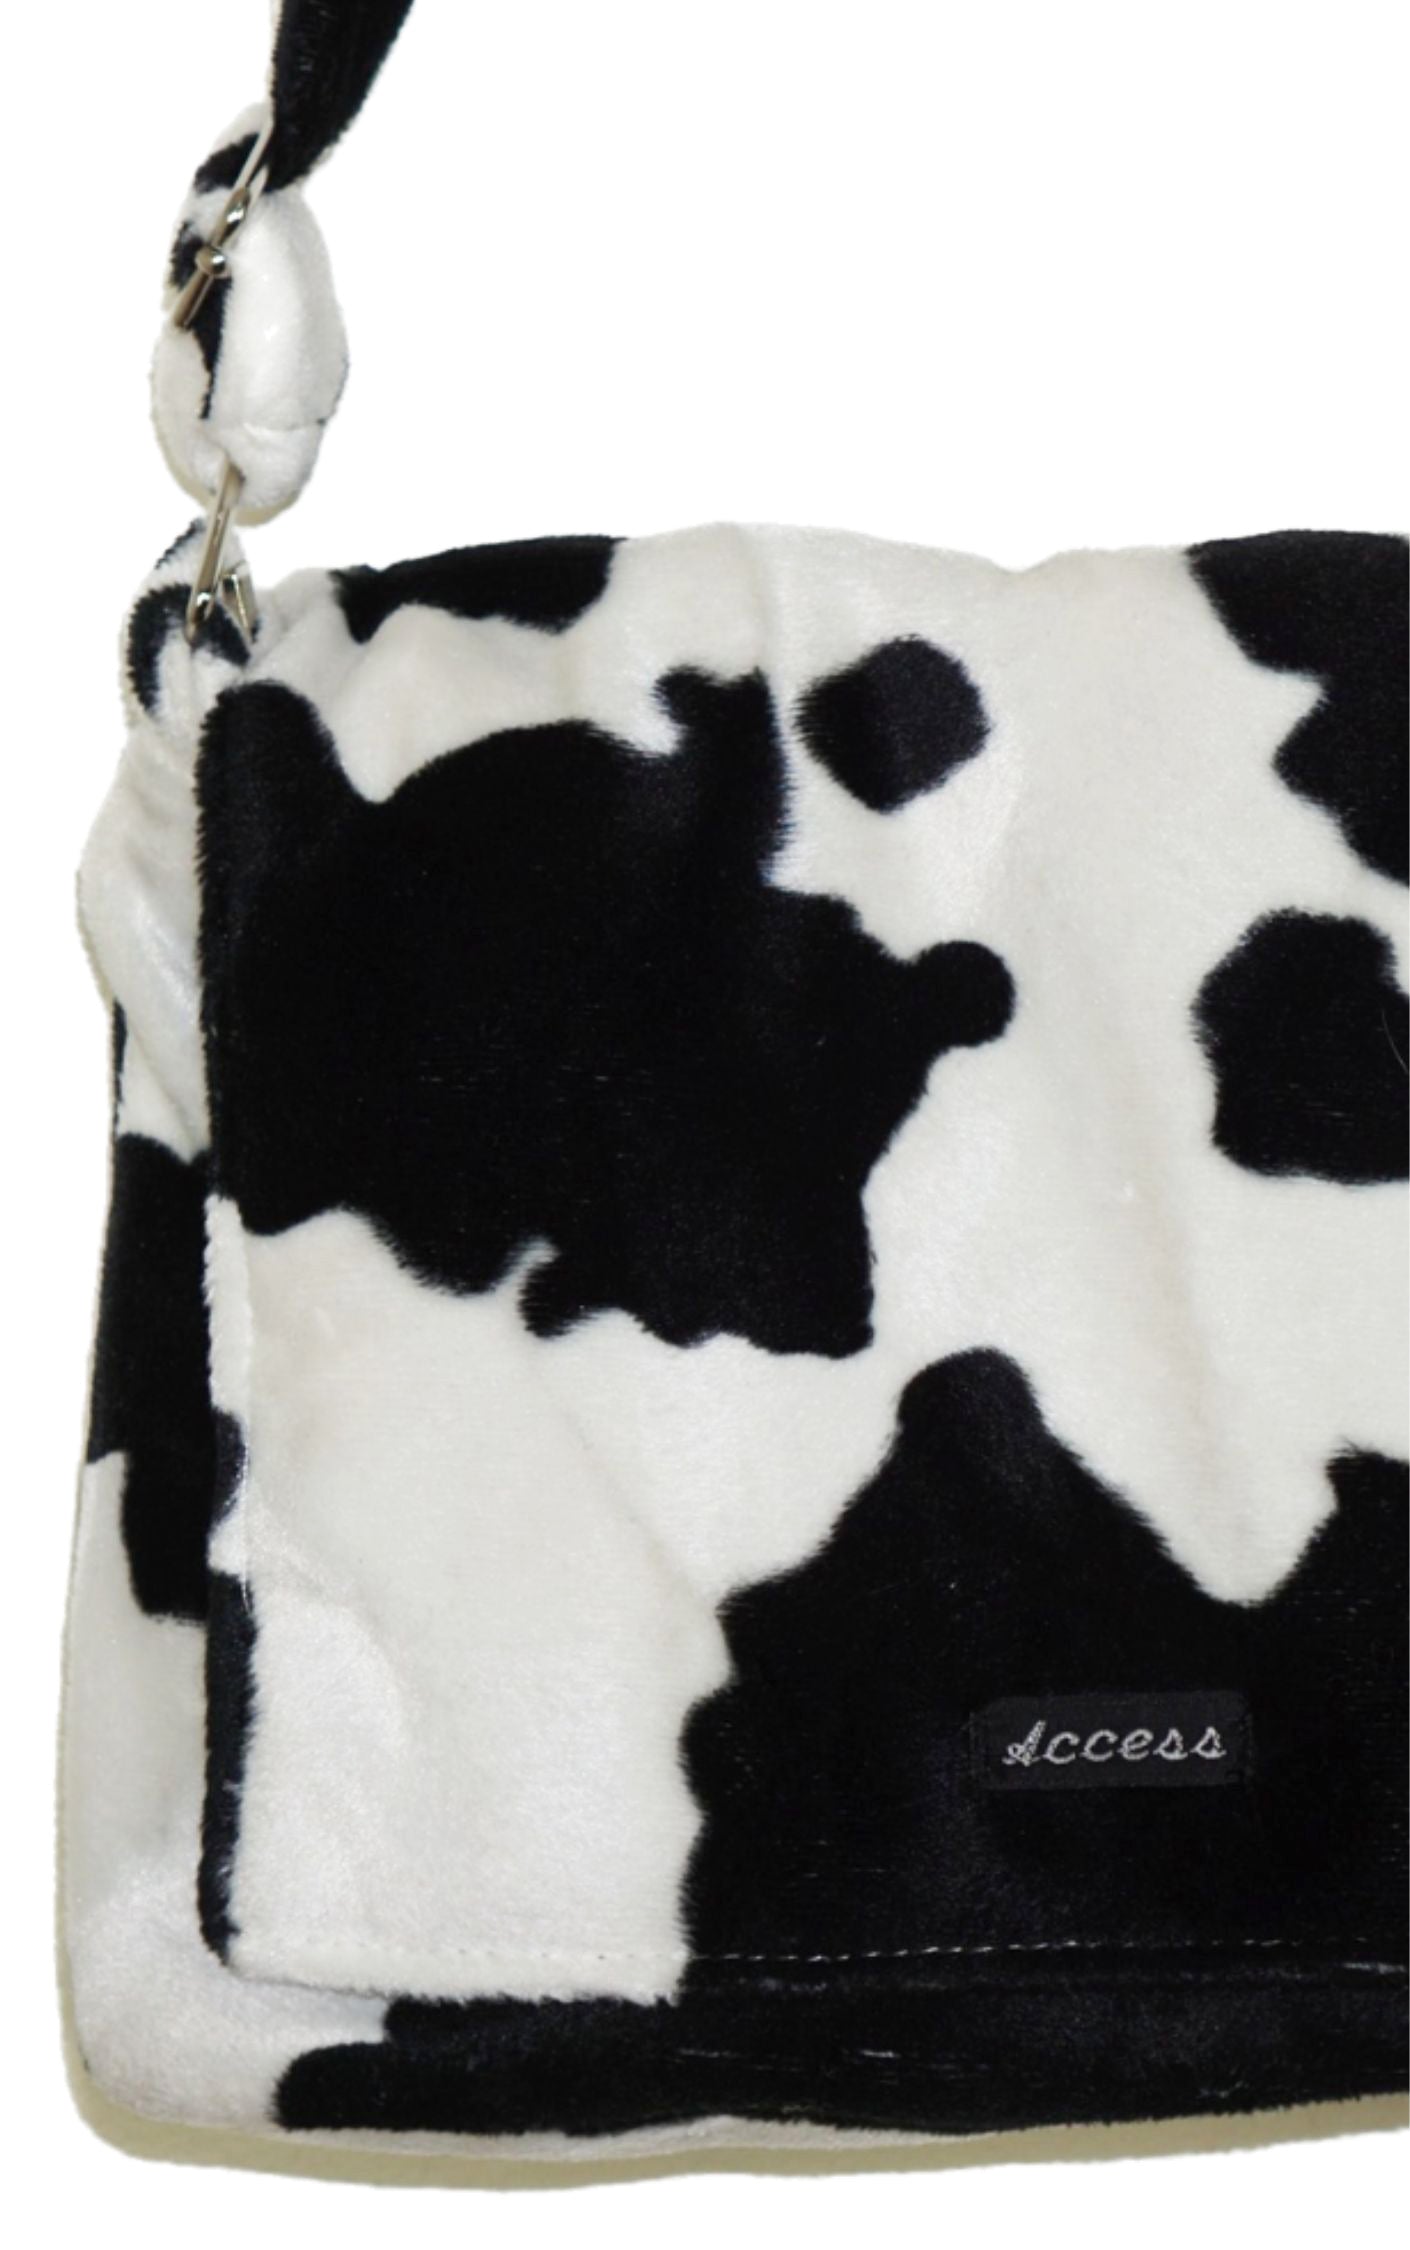 ACCESS Cow Animal Print Cross Body Bag resellum